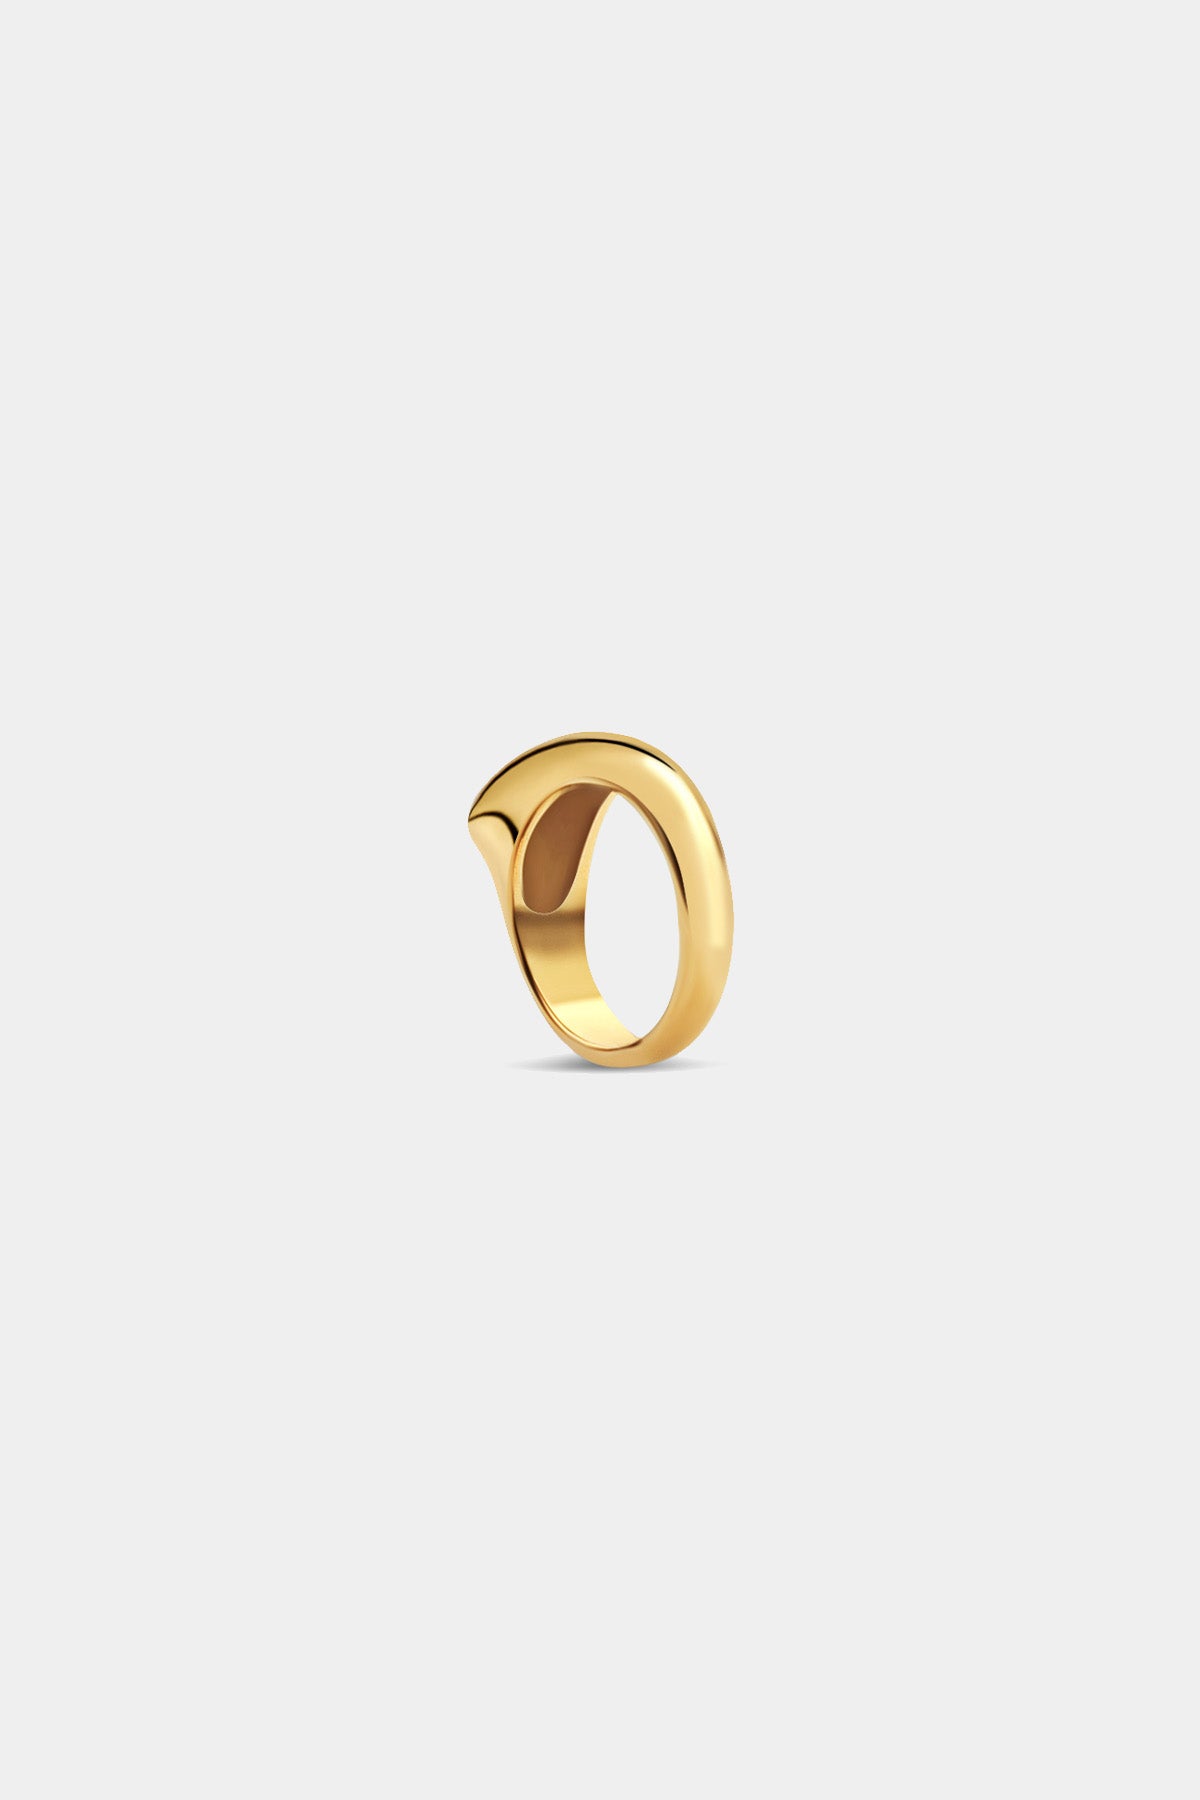 JOVANA DJURIC | SMALL YELLOW GOLD CRESCENT RING